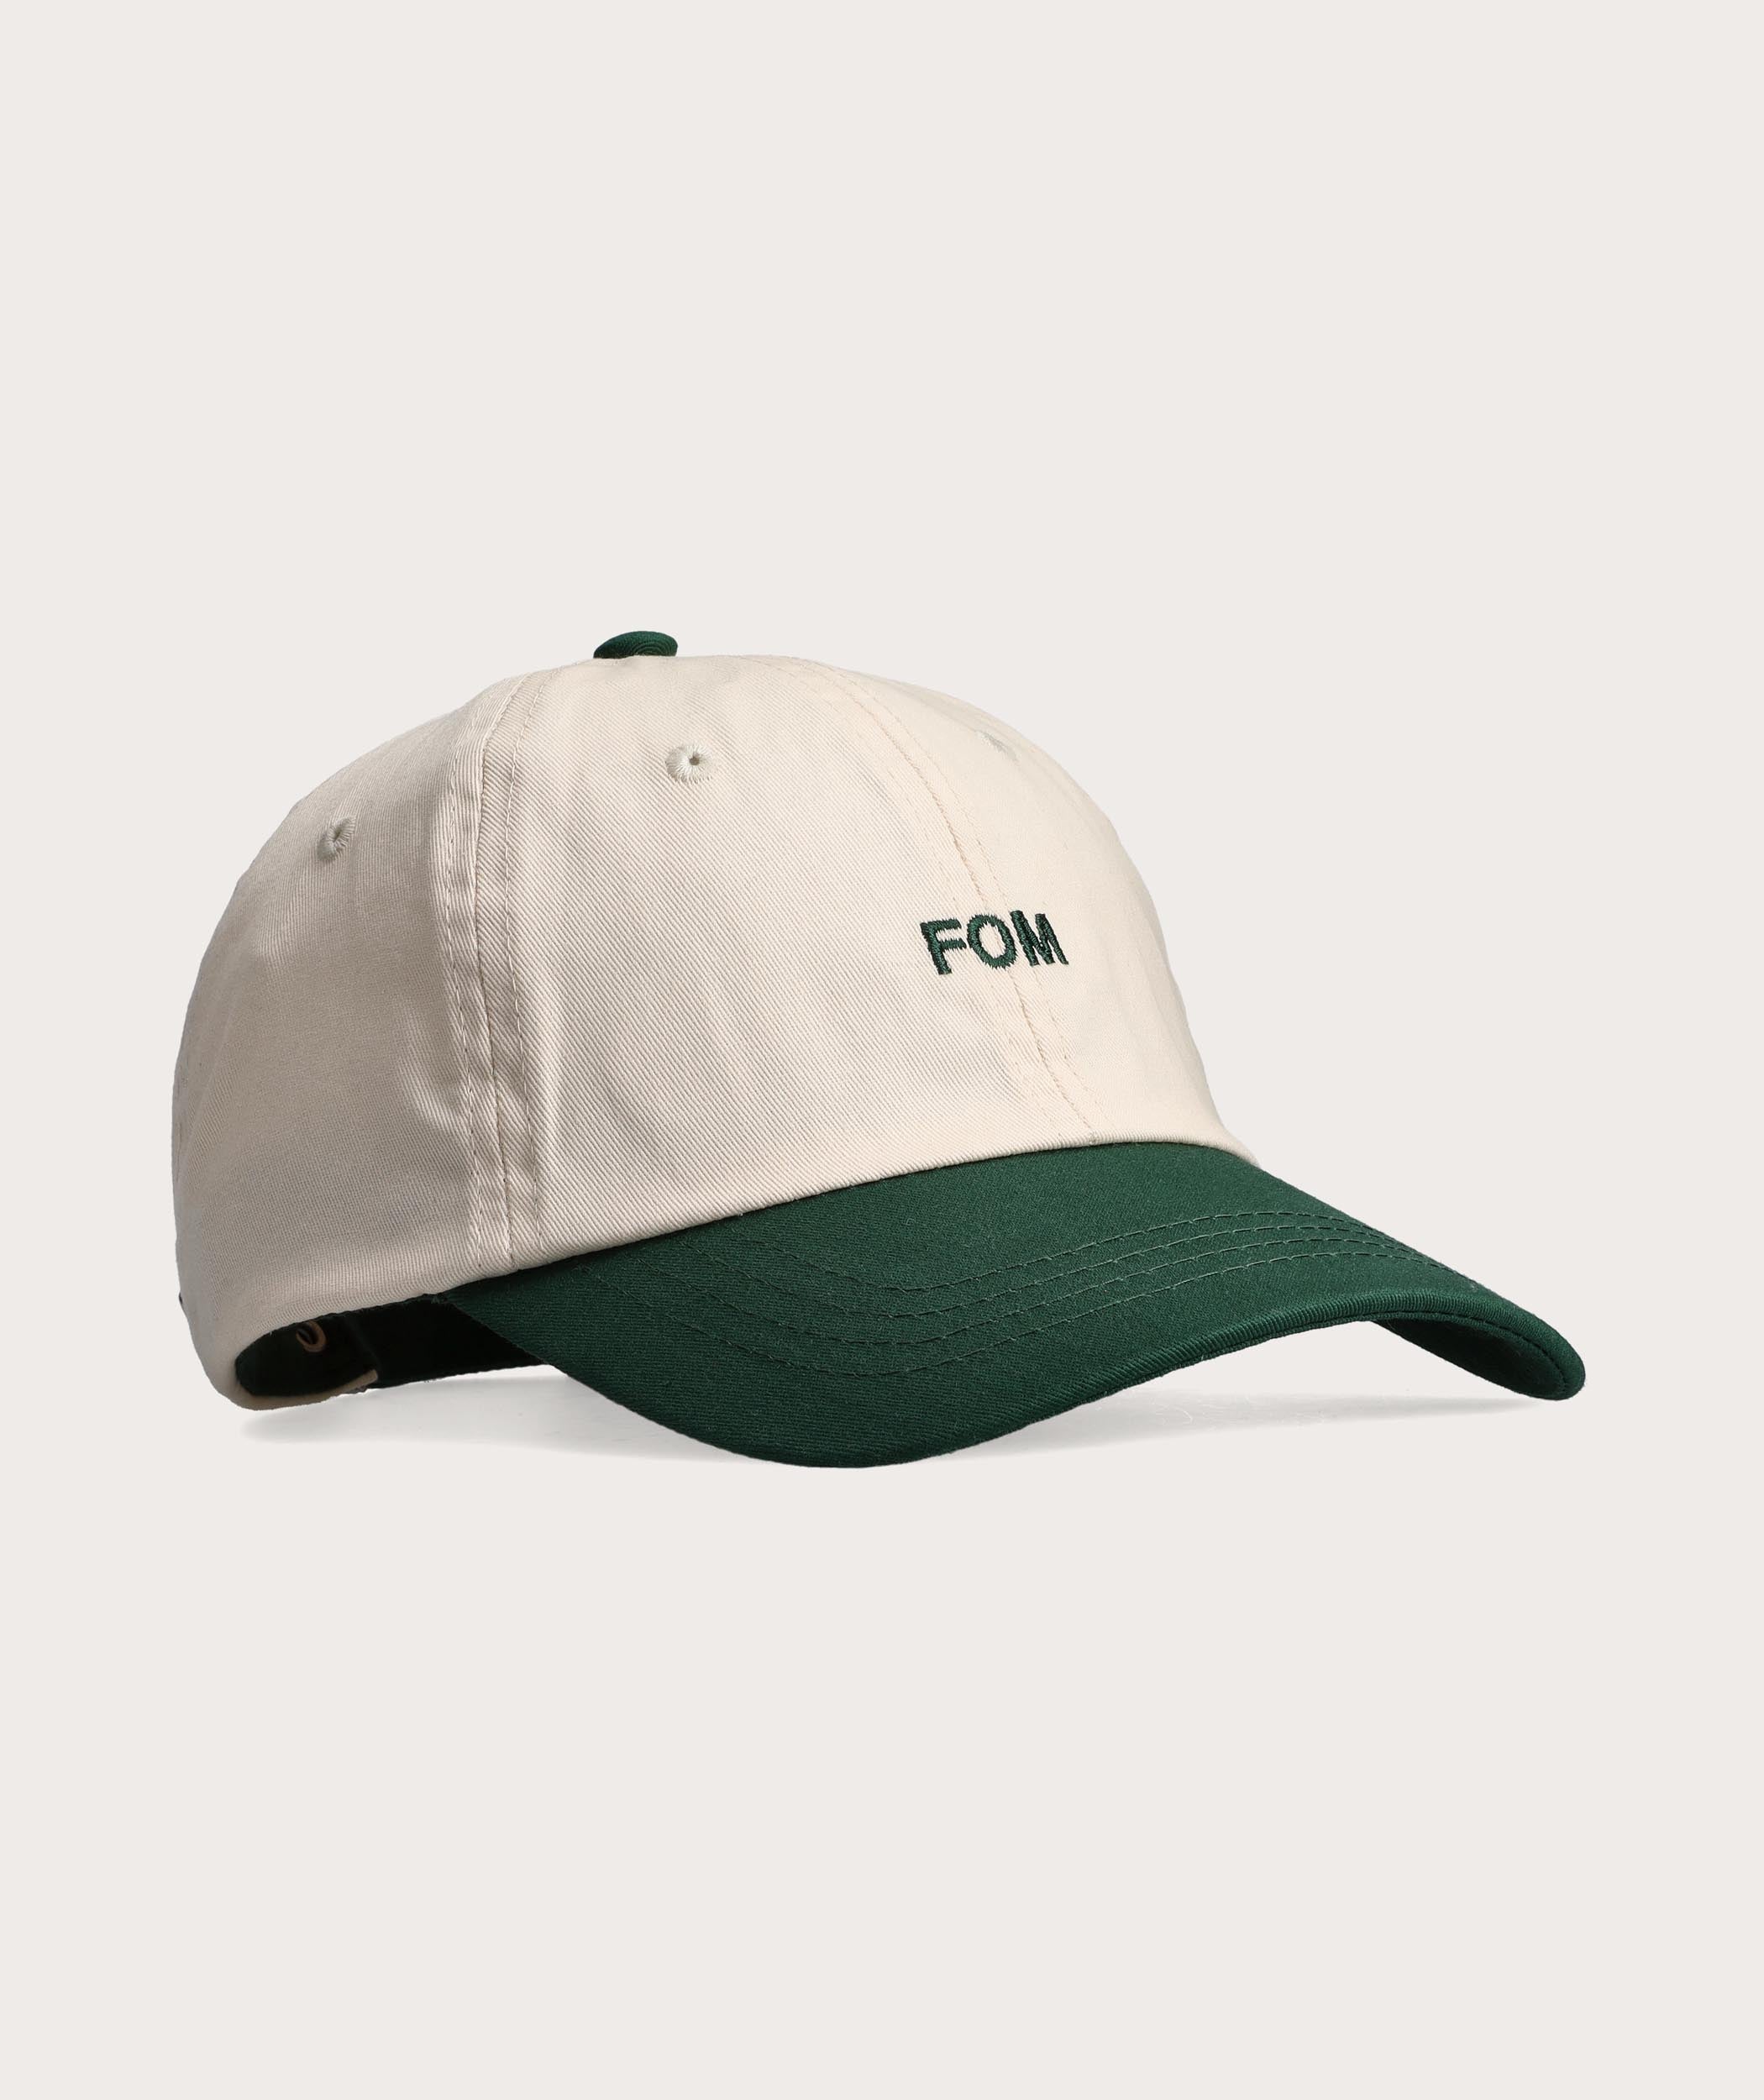 FOM Varsity Cap - Ivory/ Forest Green